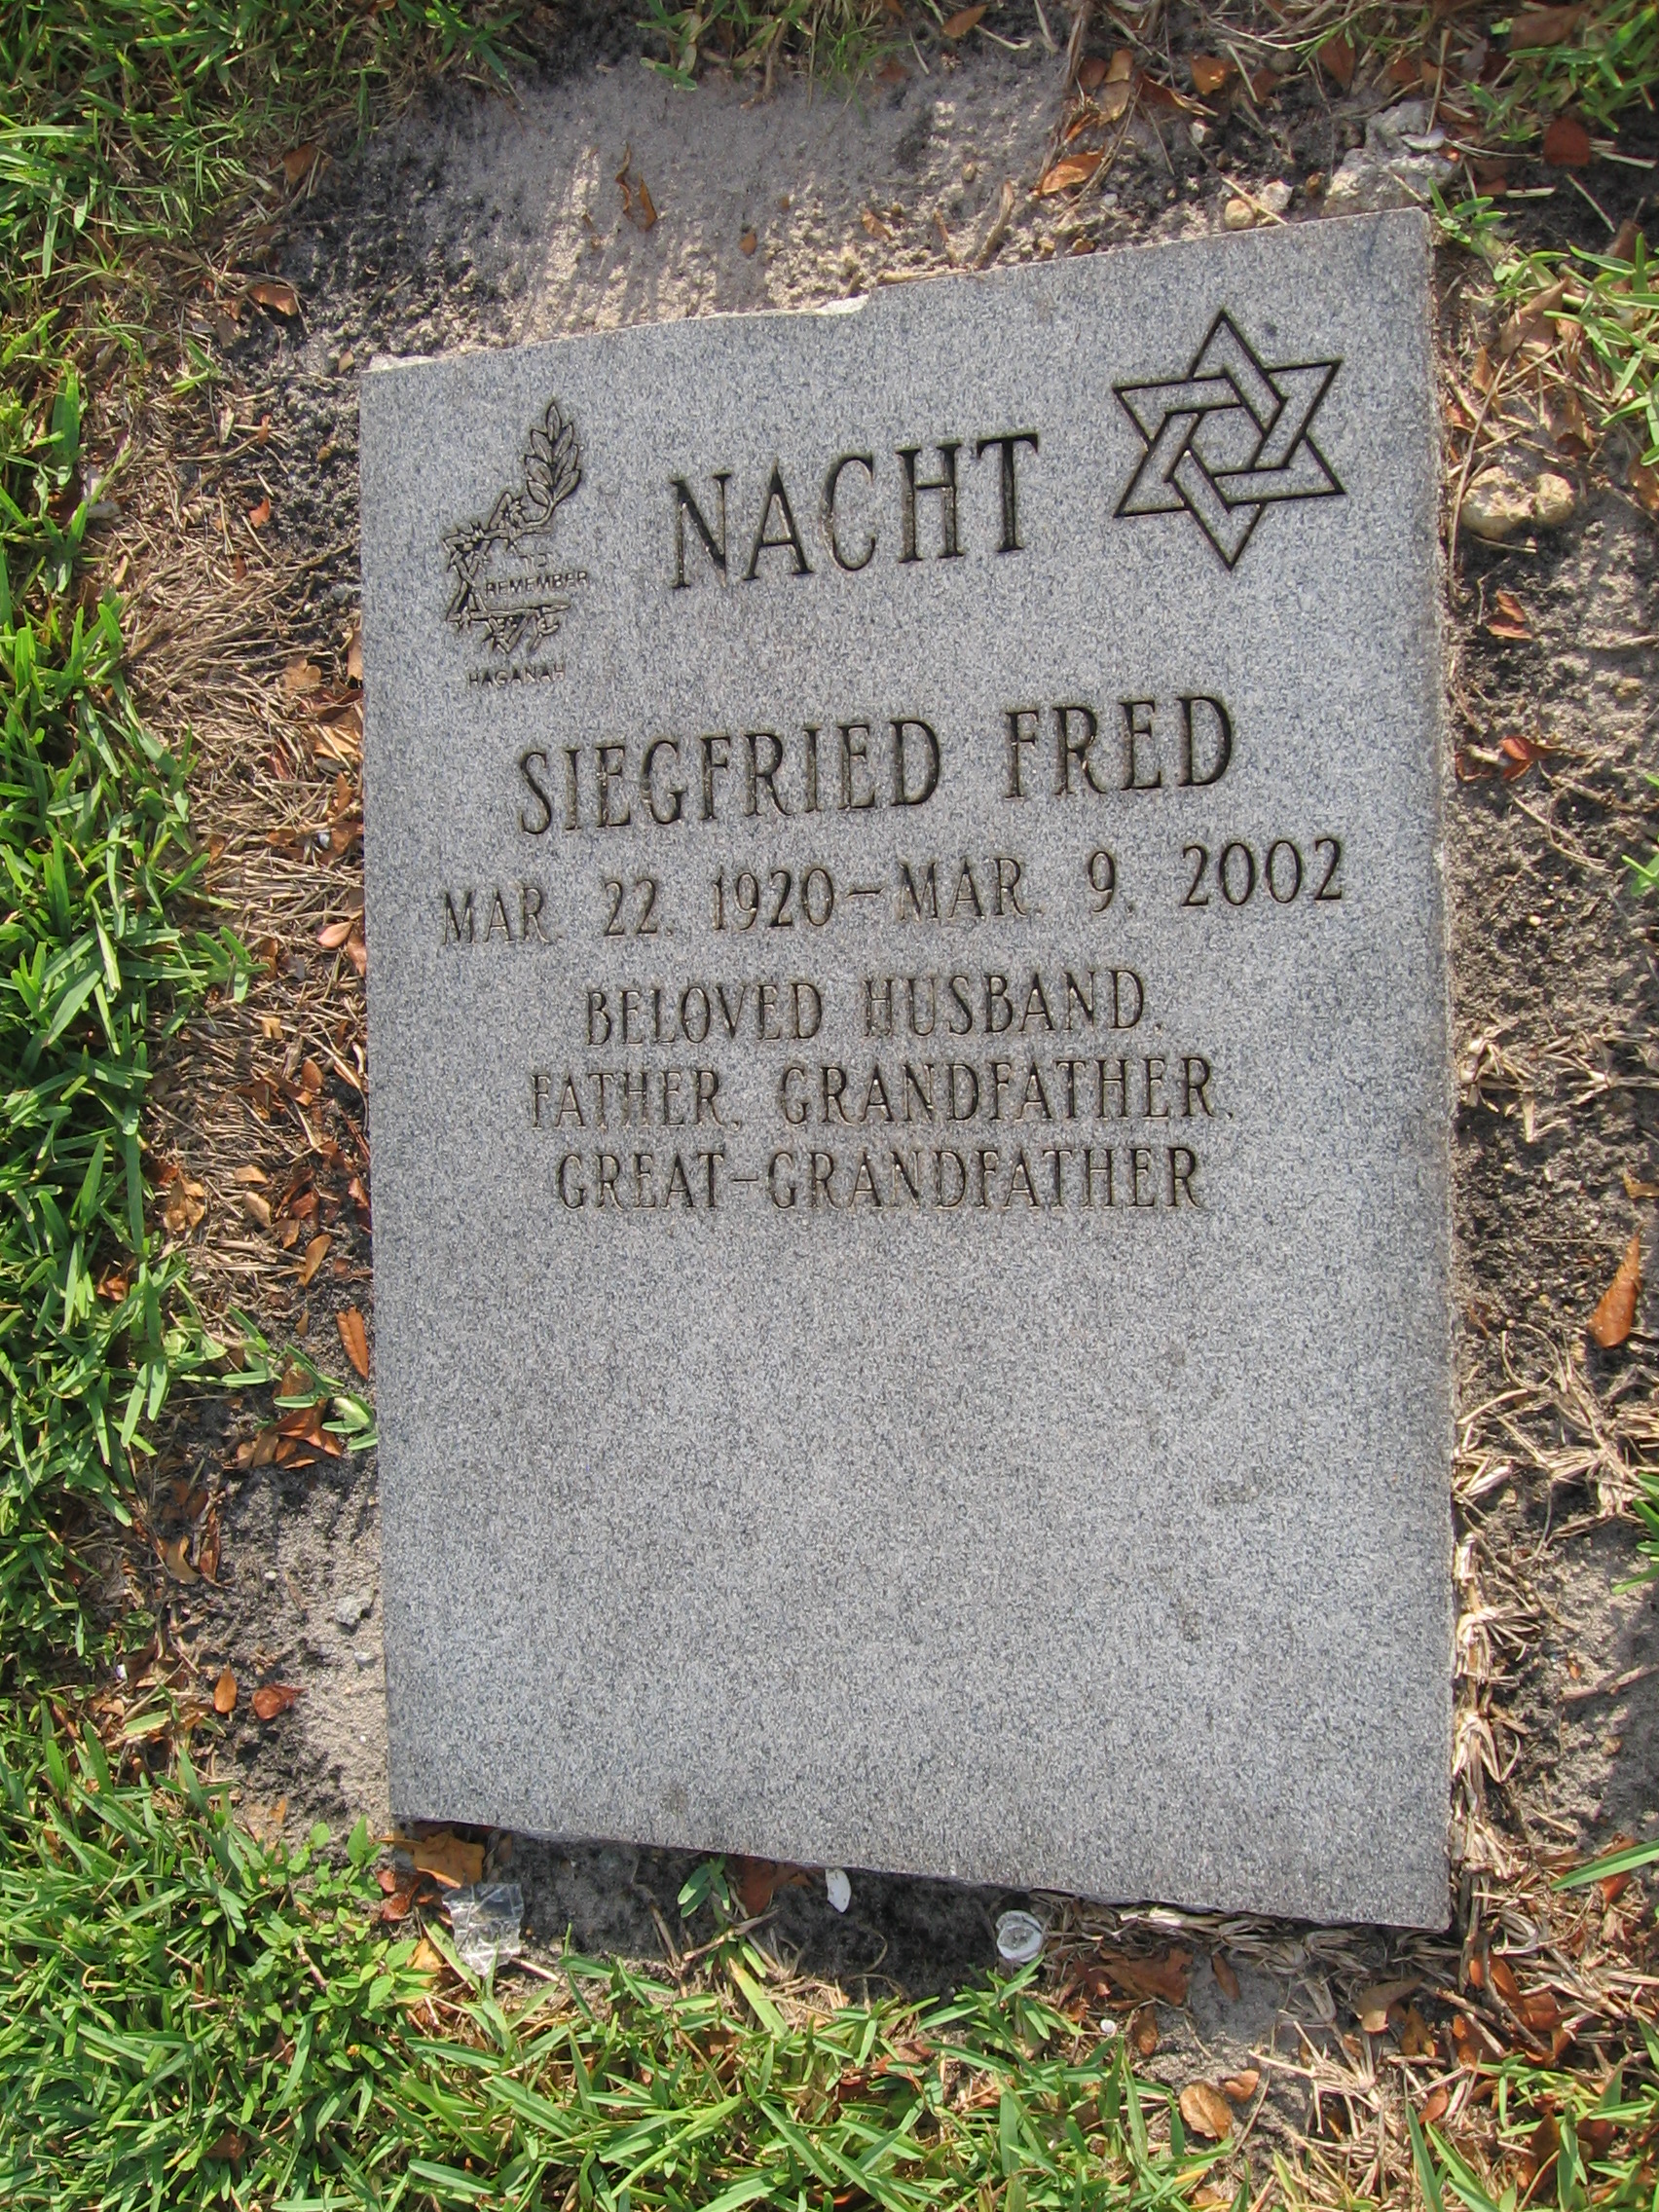 Siegfried Fred Nacht